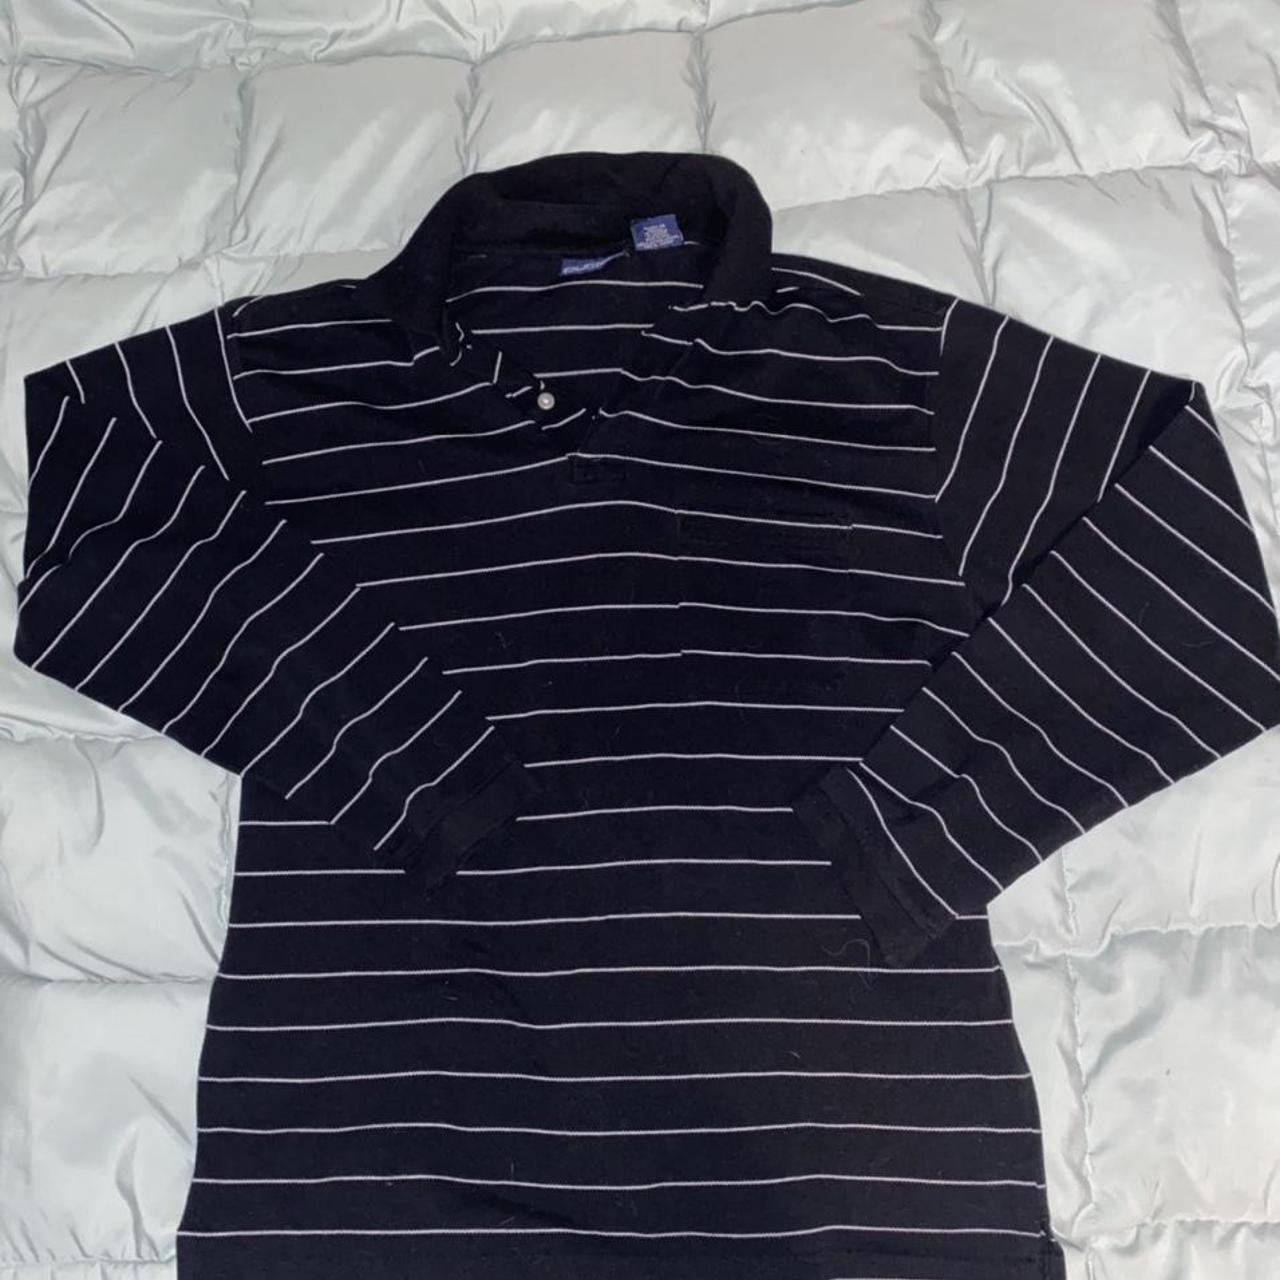 Vintage Striped Collar Shirt Black Striped Shirt... - Depop